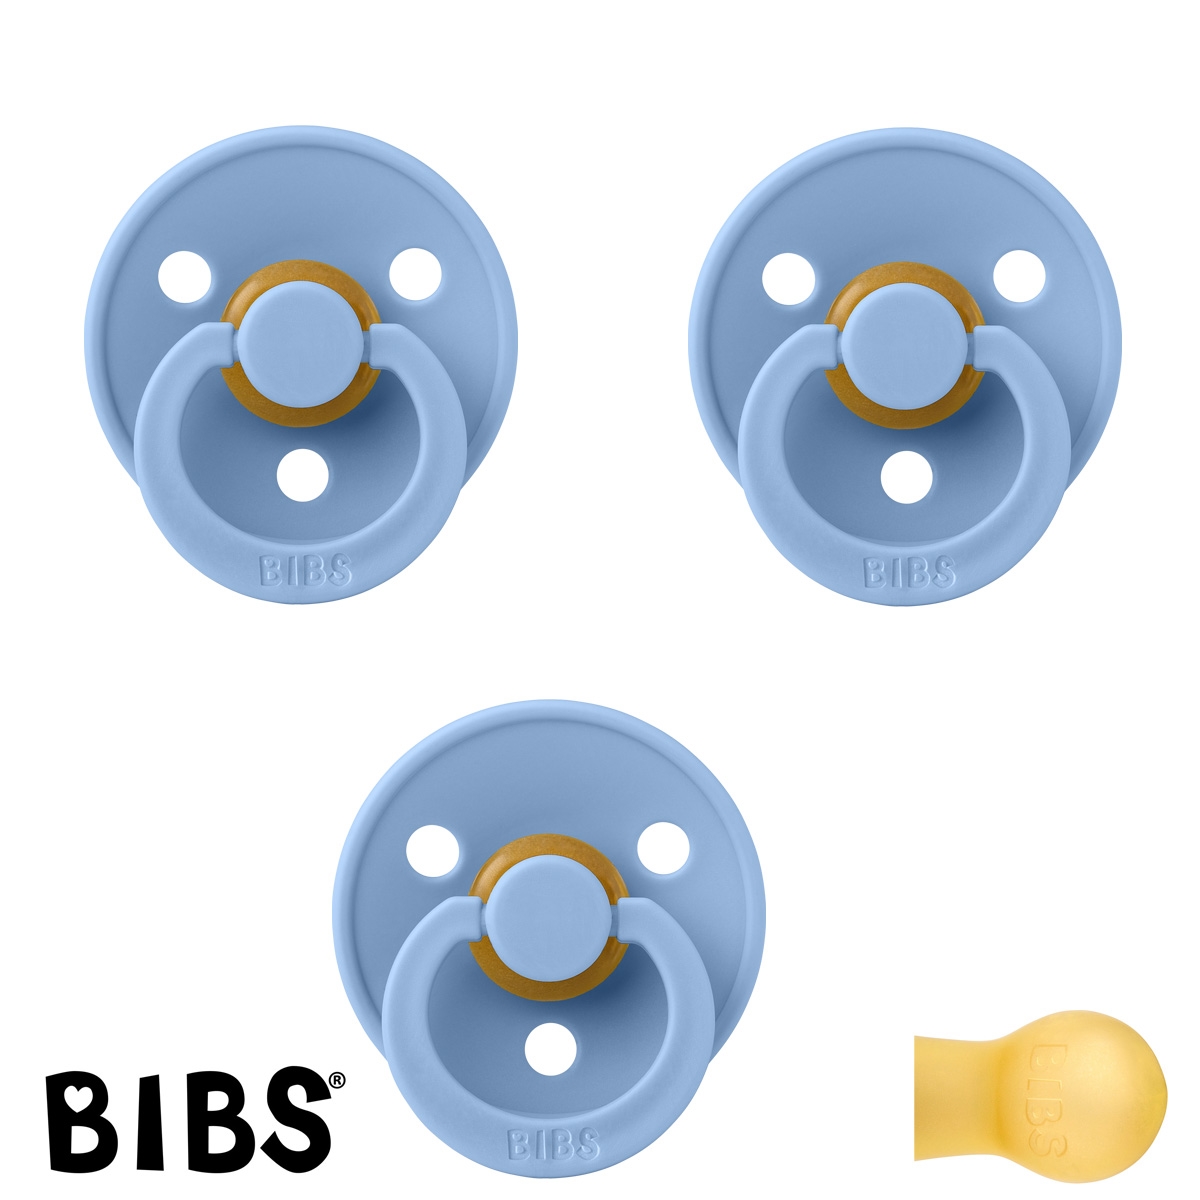 BIBS Colour Schnuller mit Namen, Gr. 2, 3 Sky Blue, Rund Latex, (3er Pack)